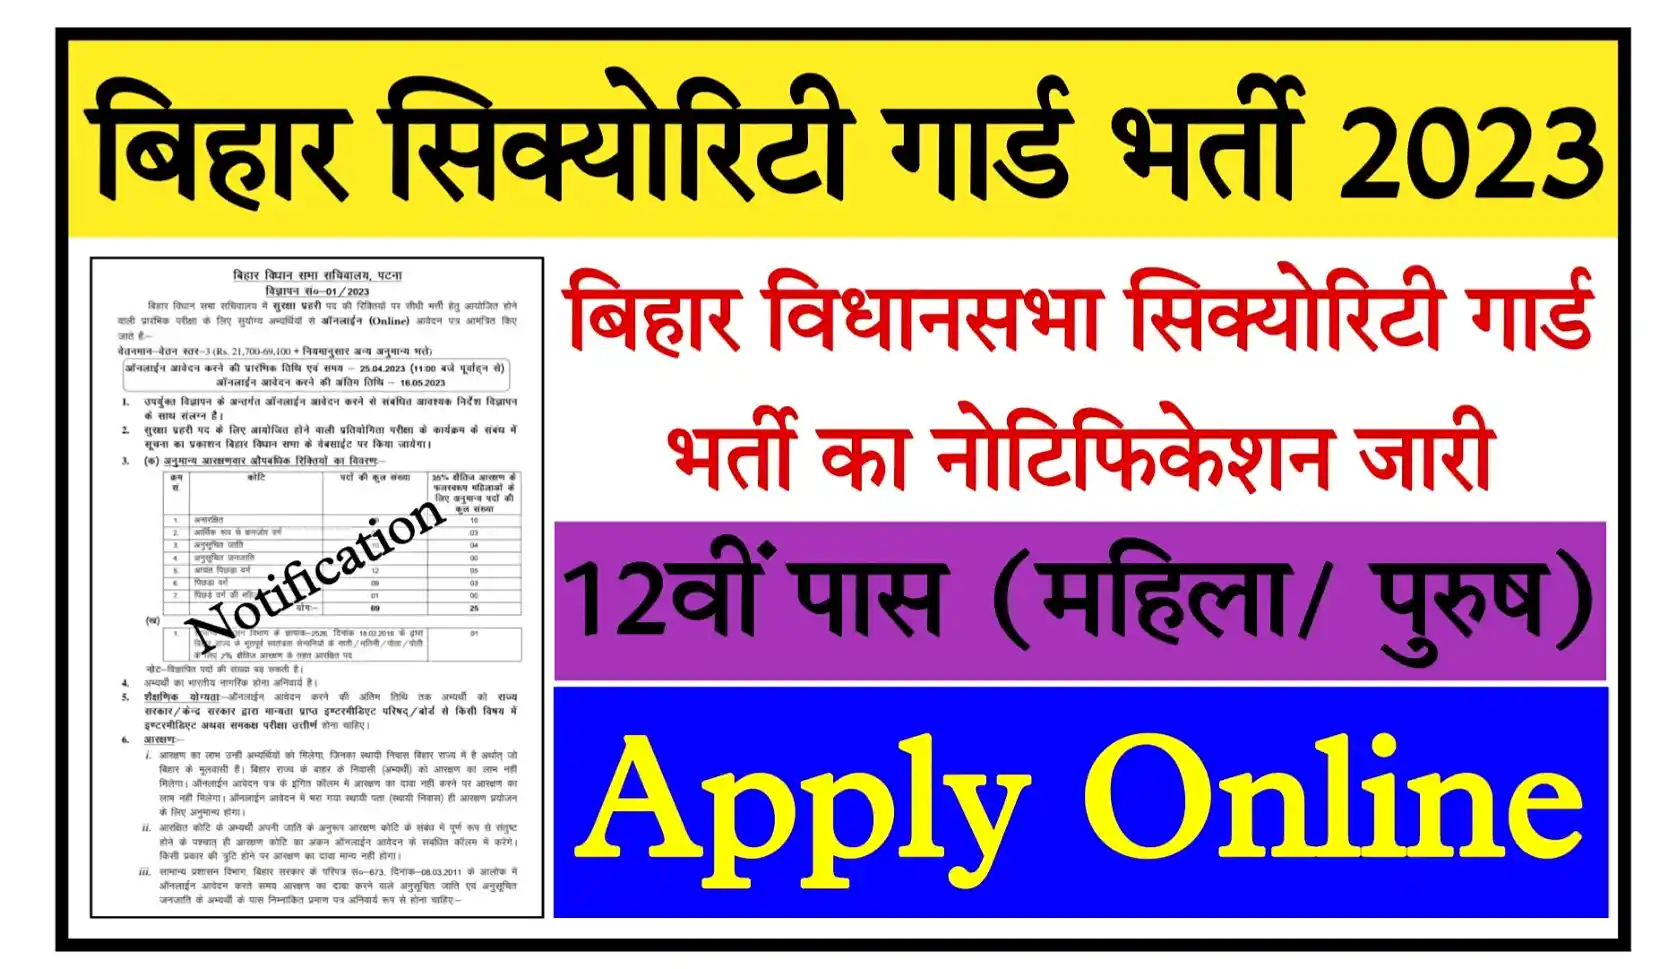 Bihar Vidhan Sabha Security Guard Recruitment 2023 Notification, Apply Online Check All Details